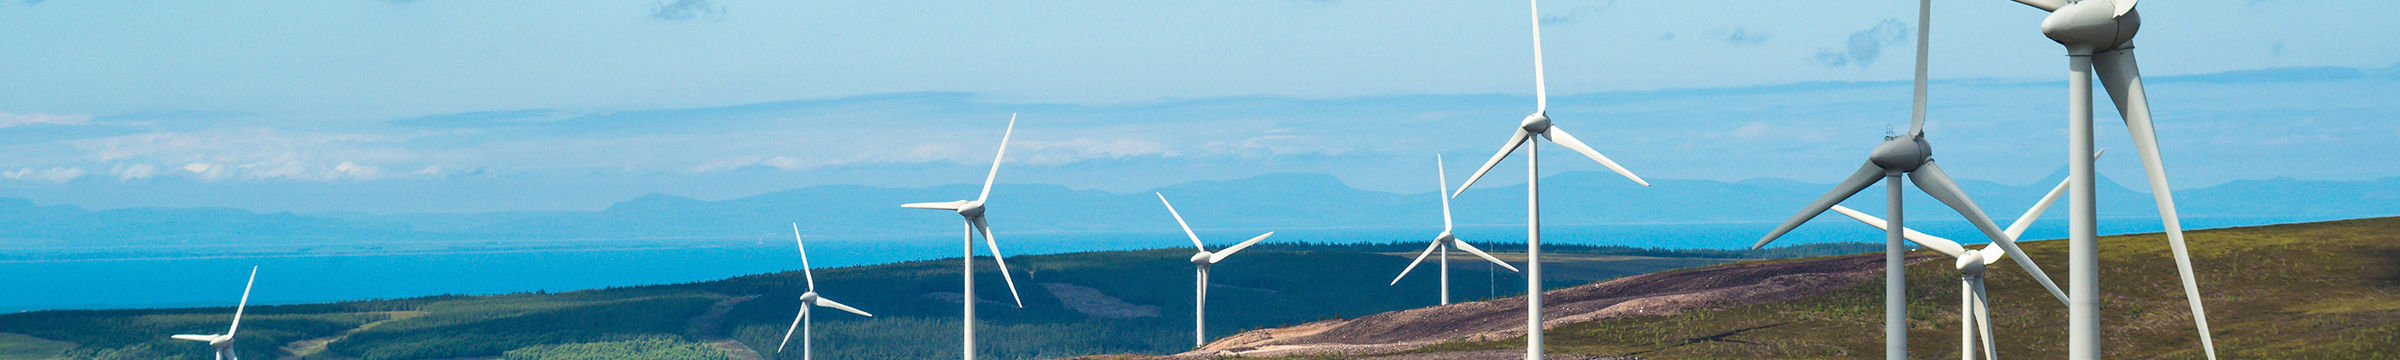 Wind farm in hilly landscape